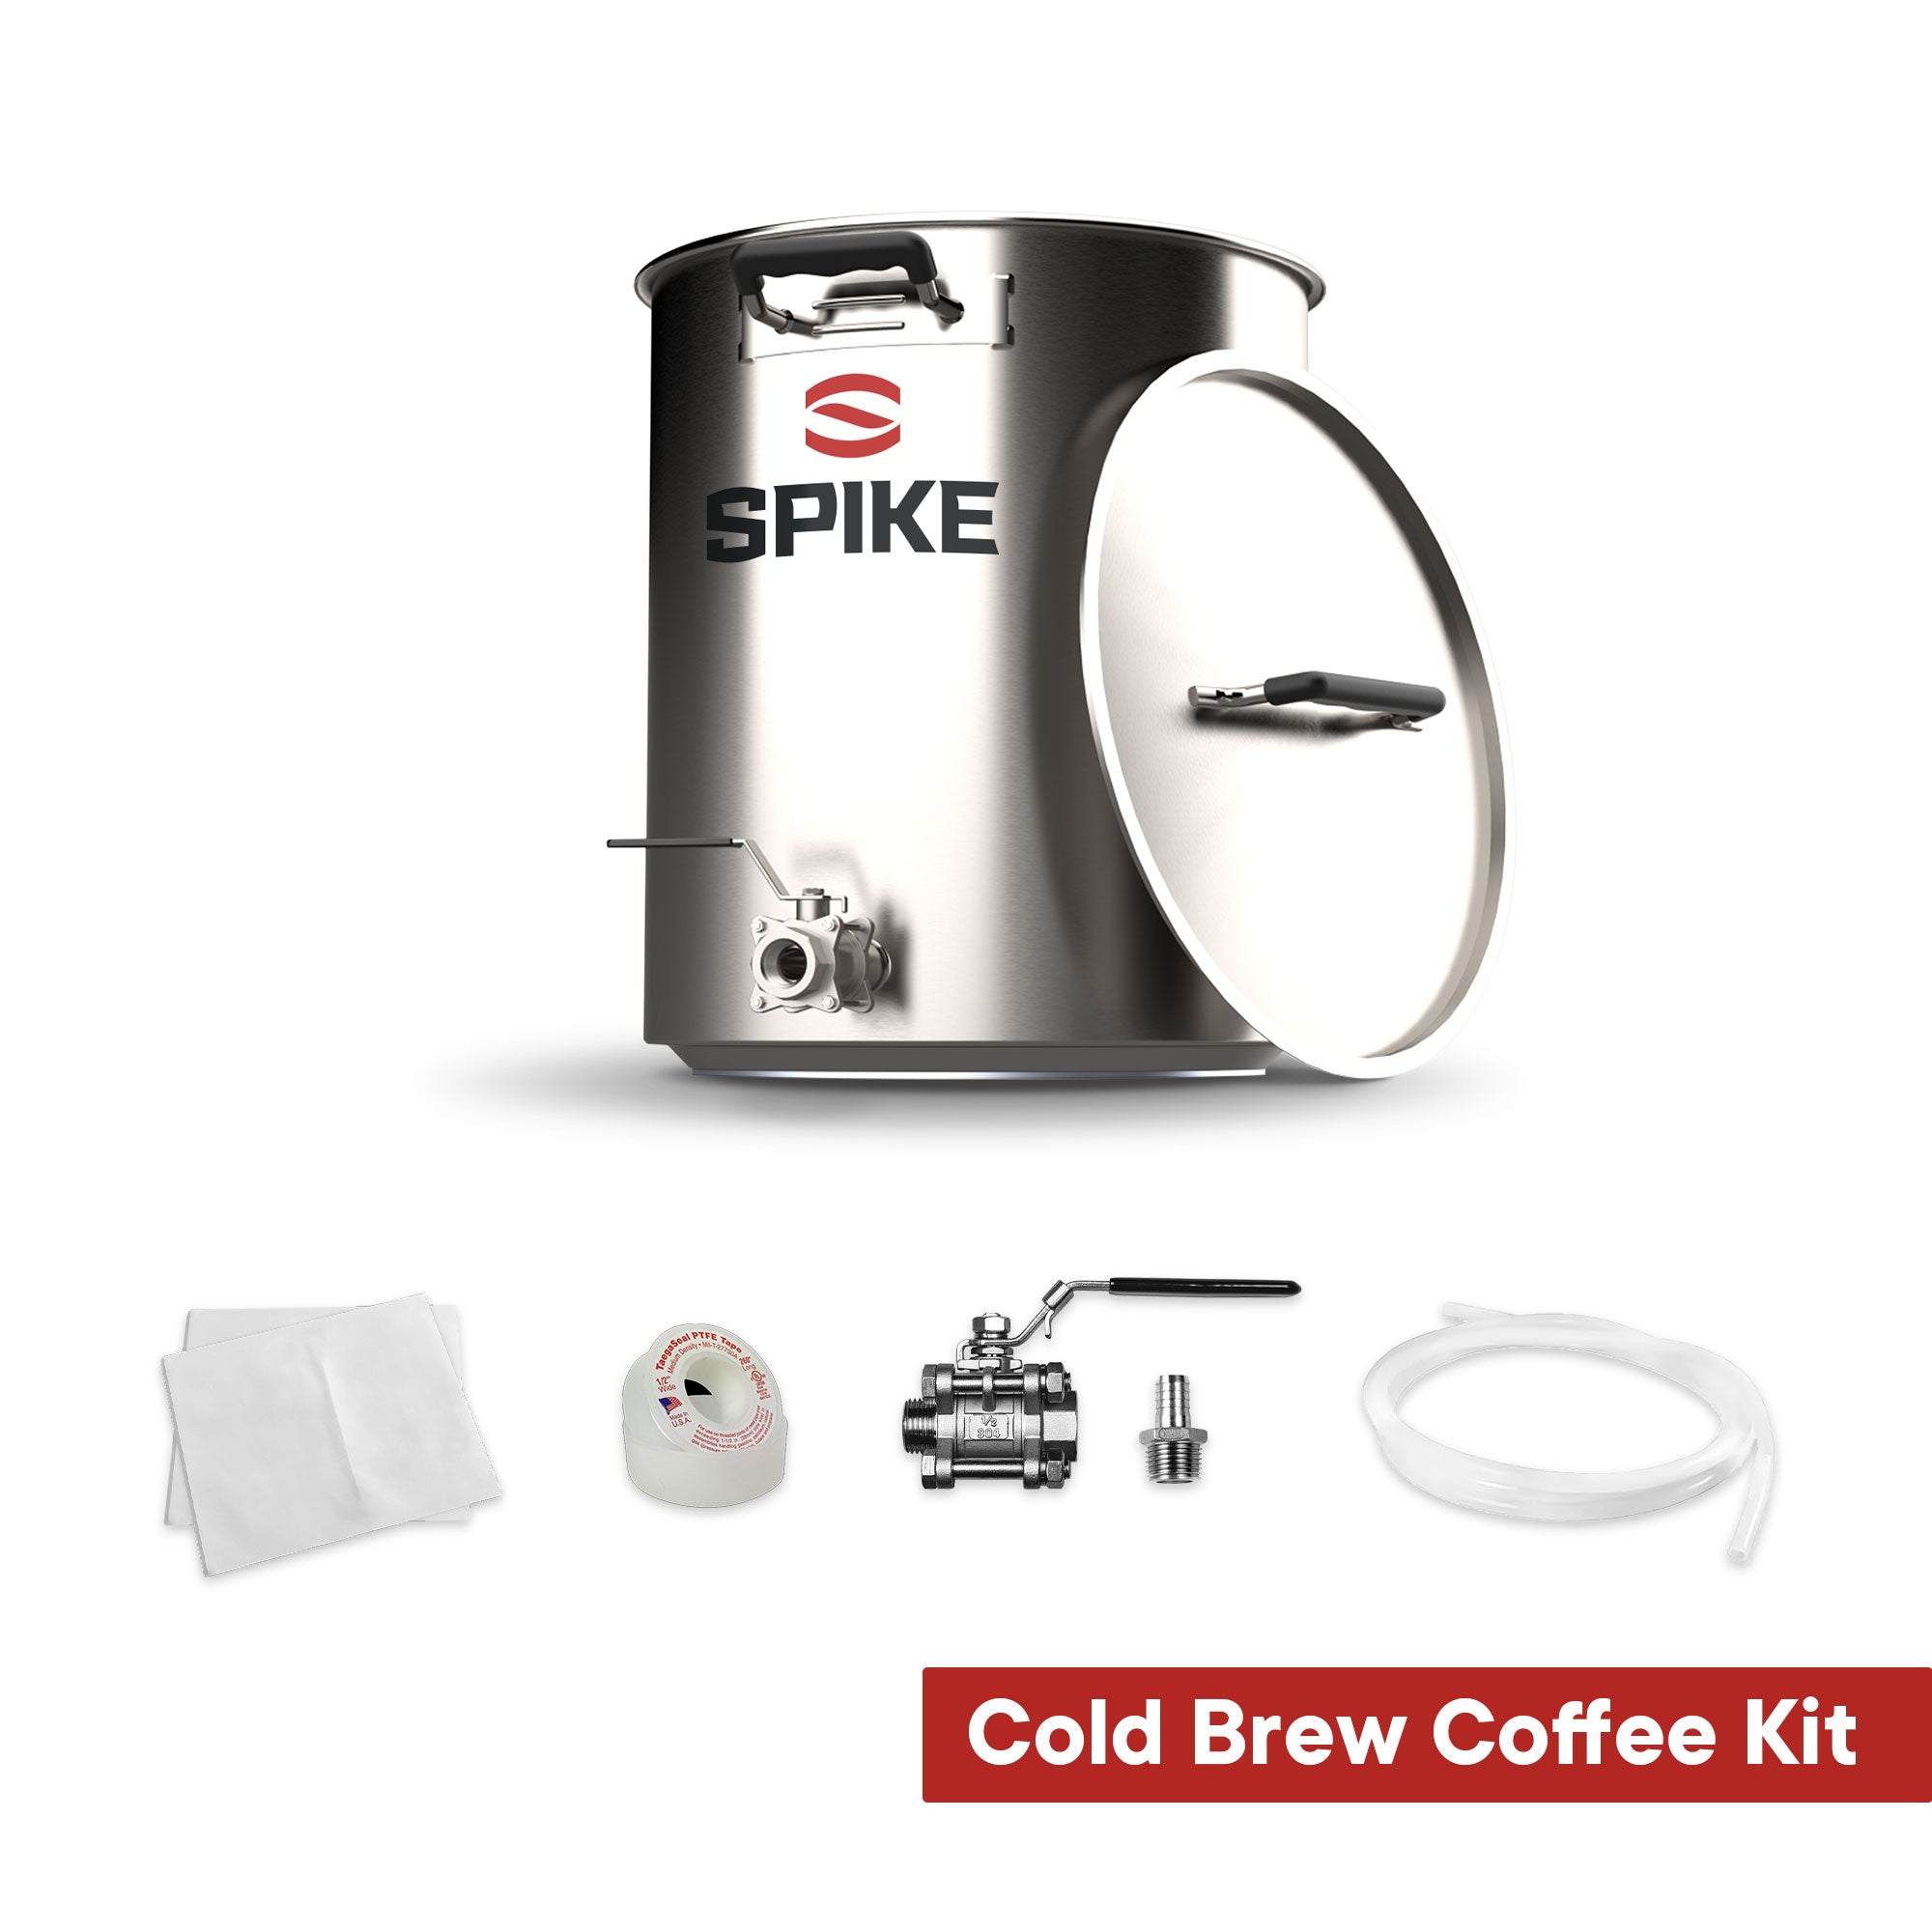 Cold Brew Coffee Kits